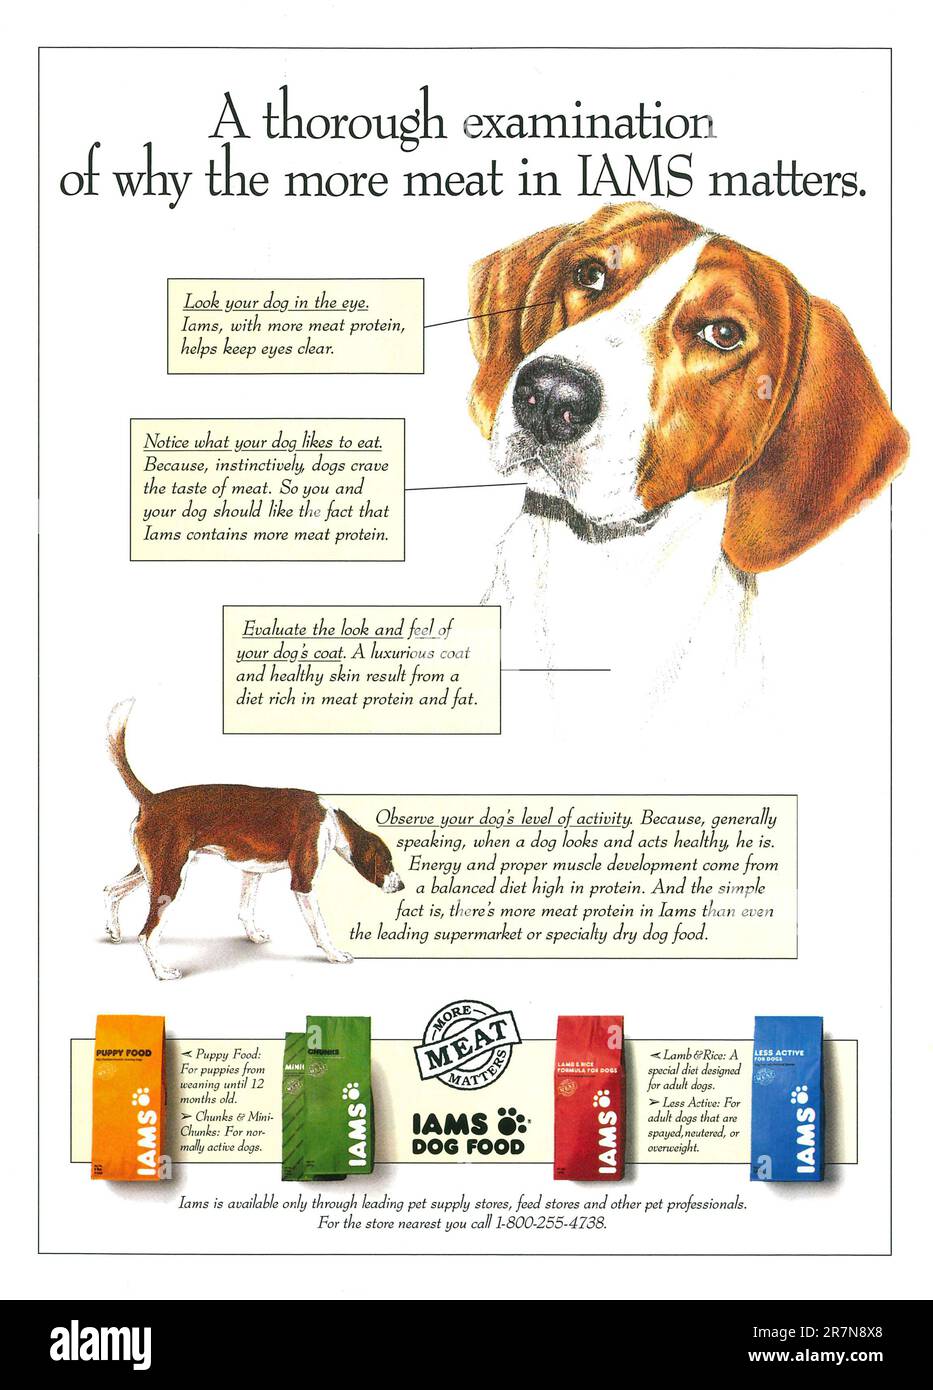 IAMS Dog Food advert in a magazine 1993 Stock Photo